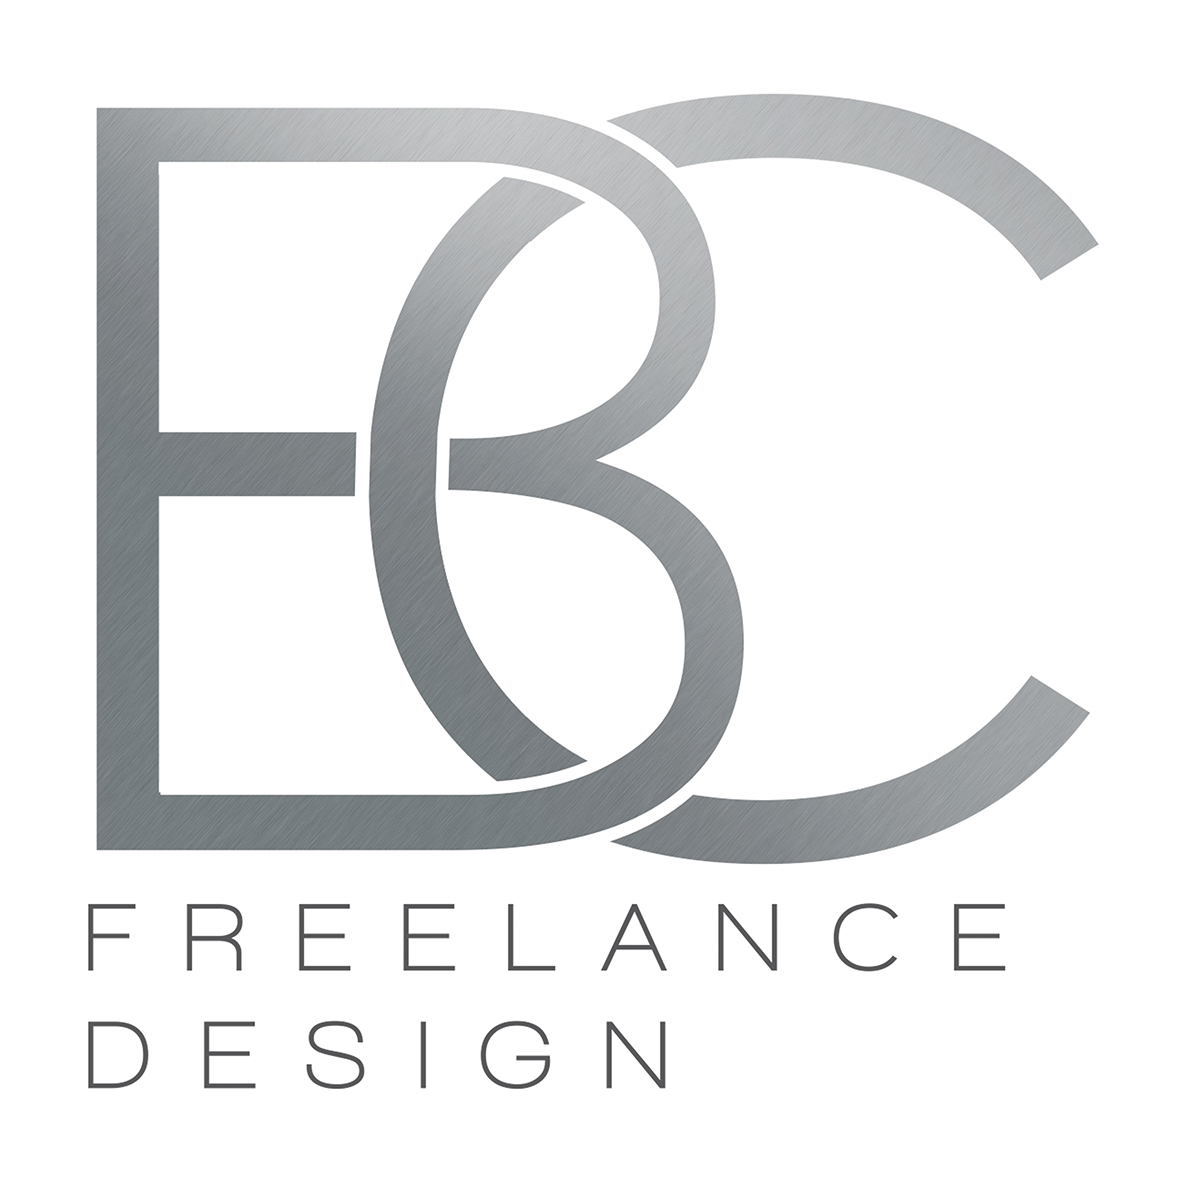 BC freelance design - St Kilda Accommodation